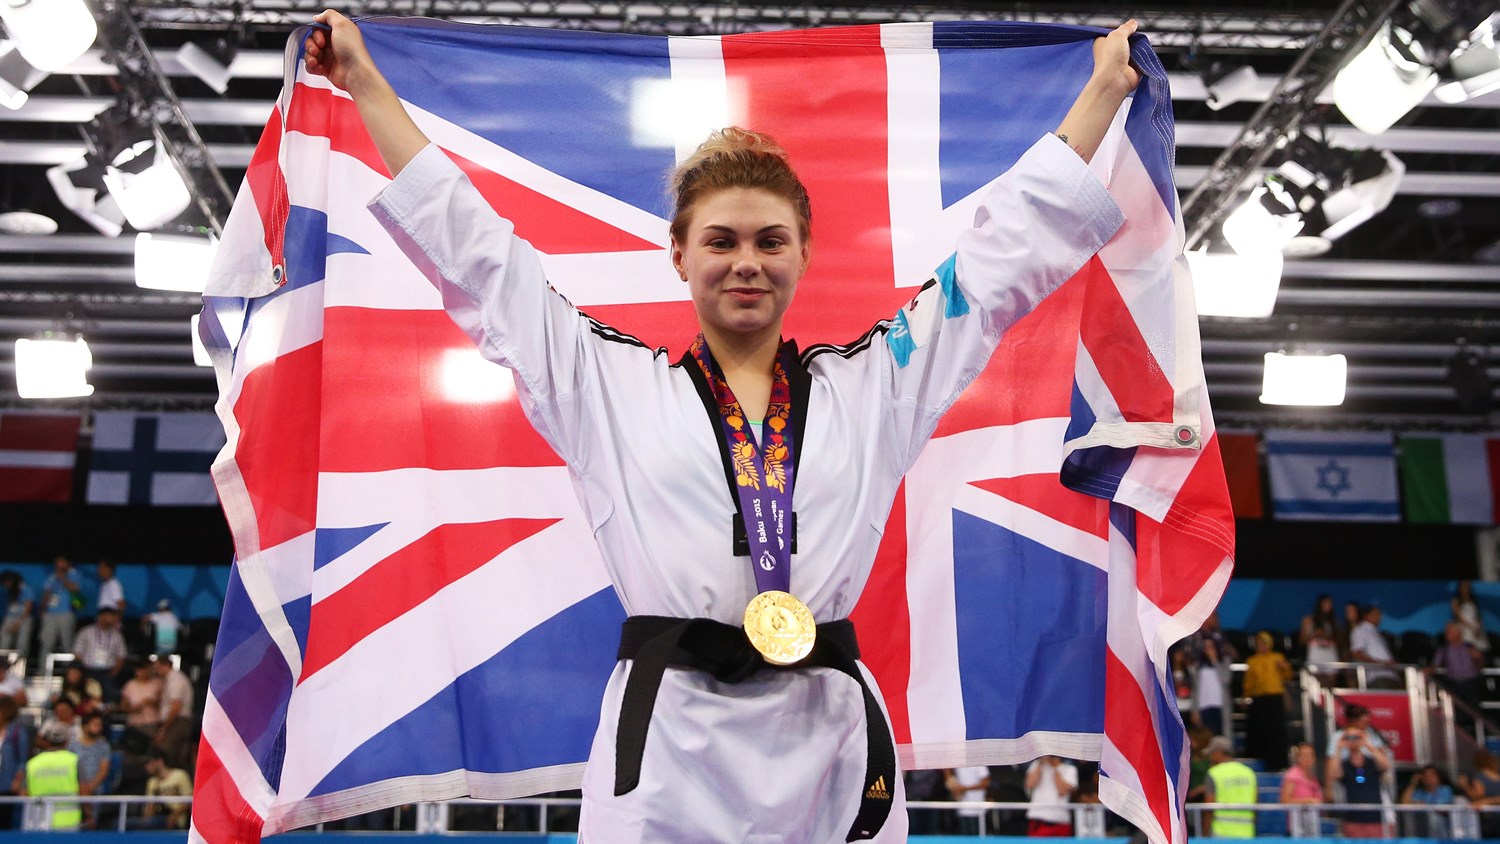 Kickboxer turned taekwondoka Maddock wins gold